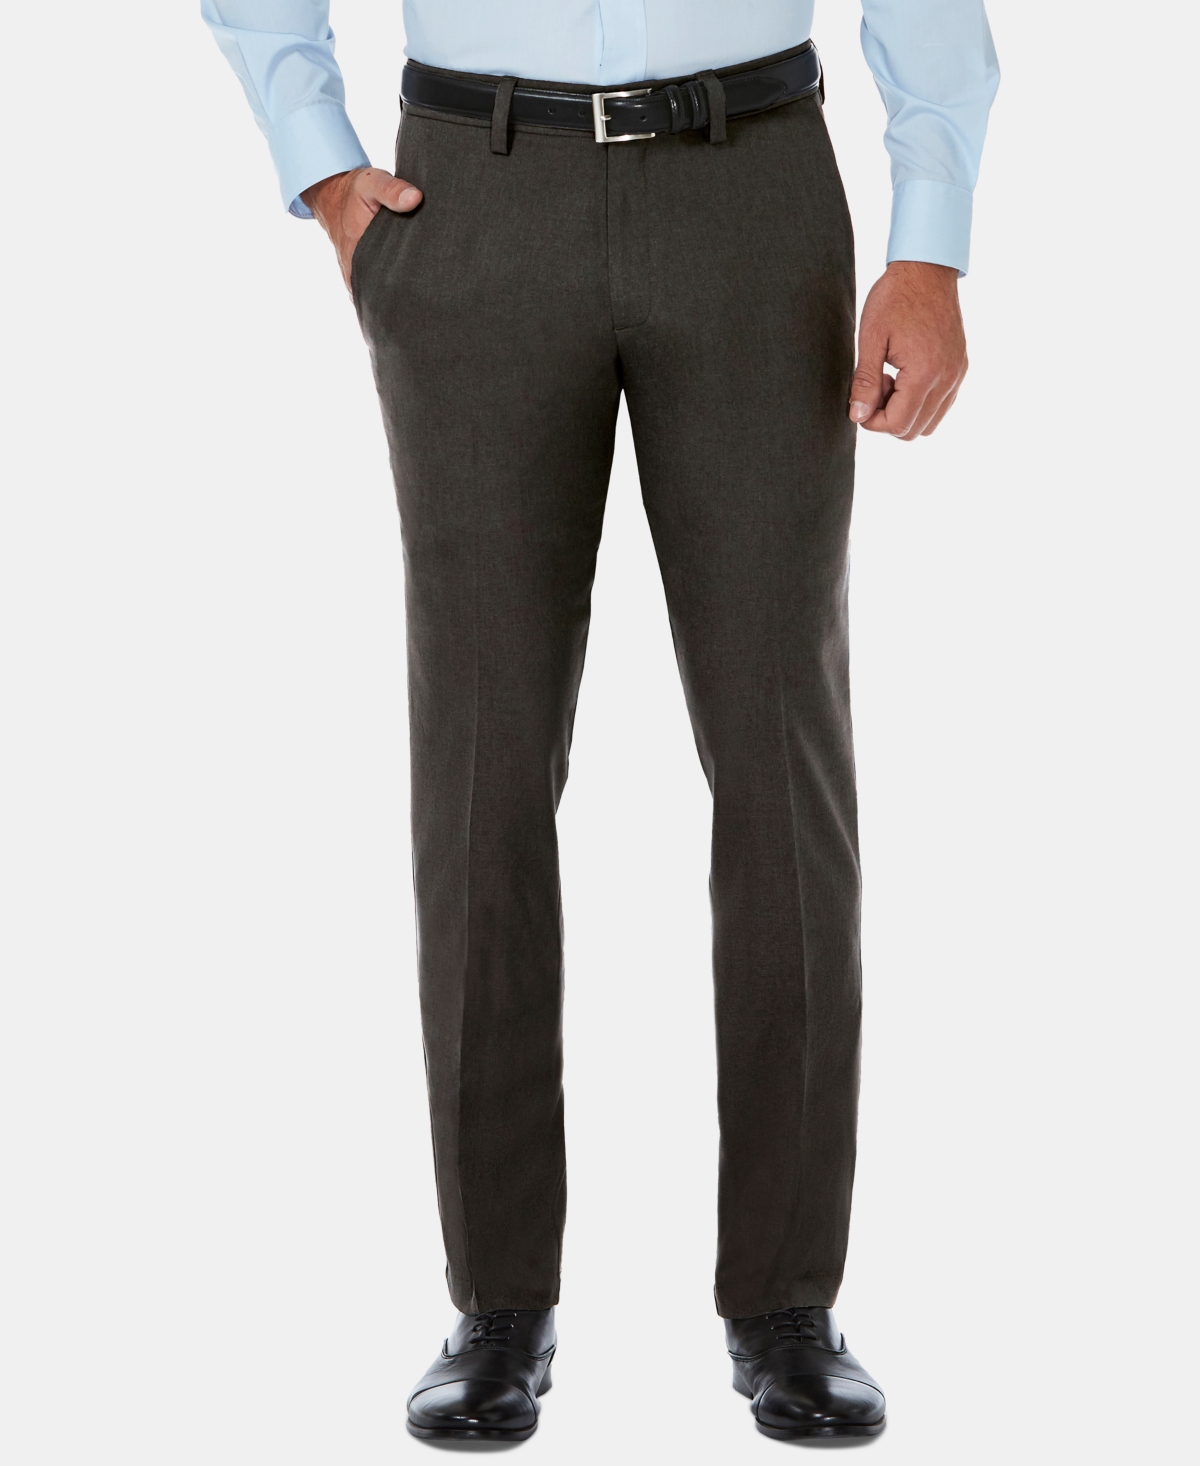 Men's Cool 18 Pro Slim-Fit 4-Way Stretch Moisture-Wicking Non-Iron Dress Pants - Dark Heather Grey